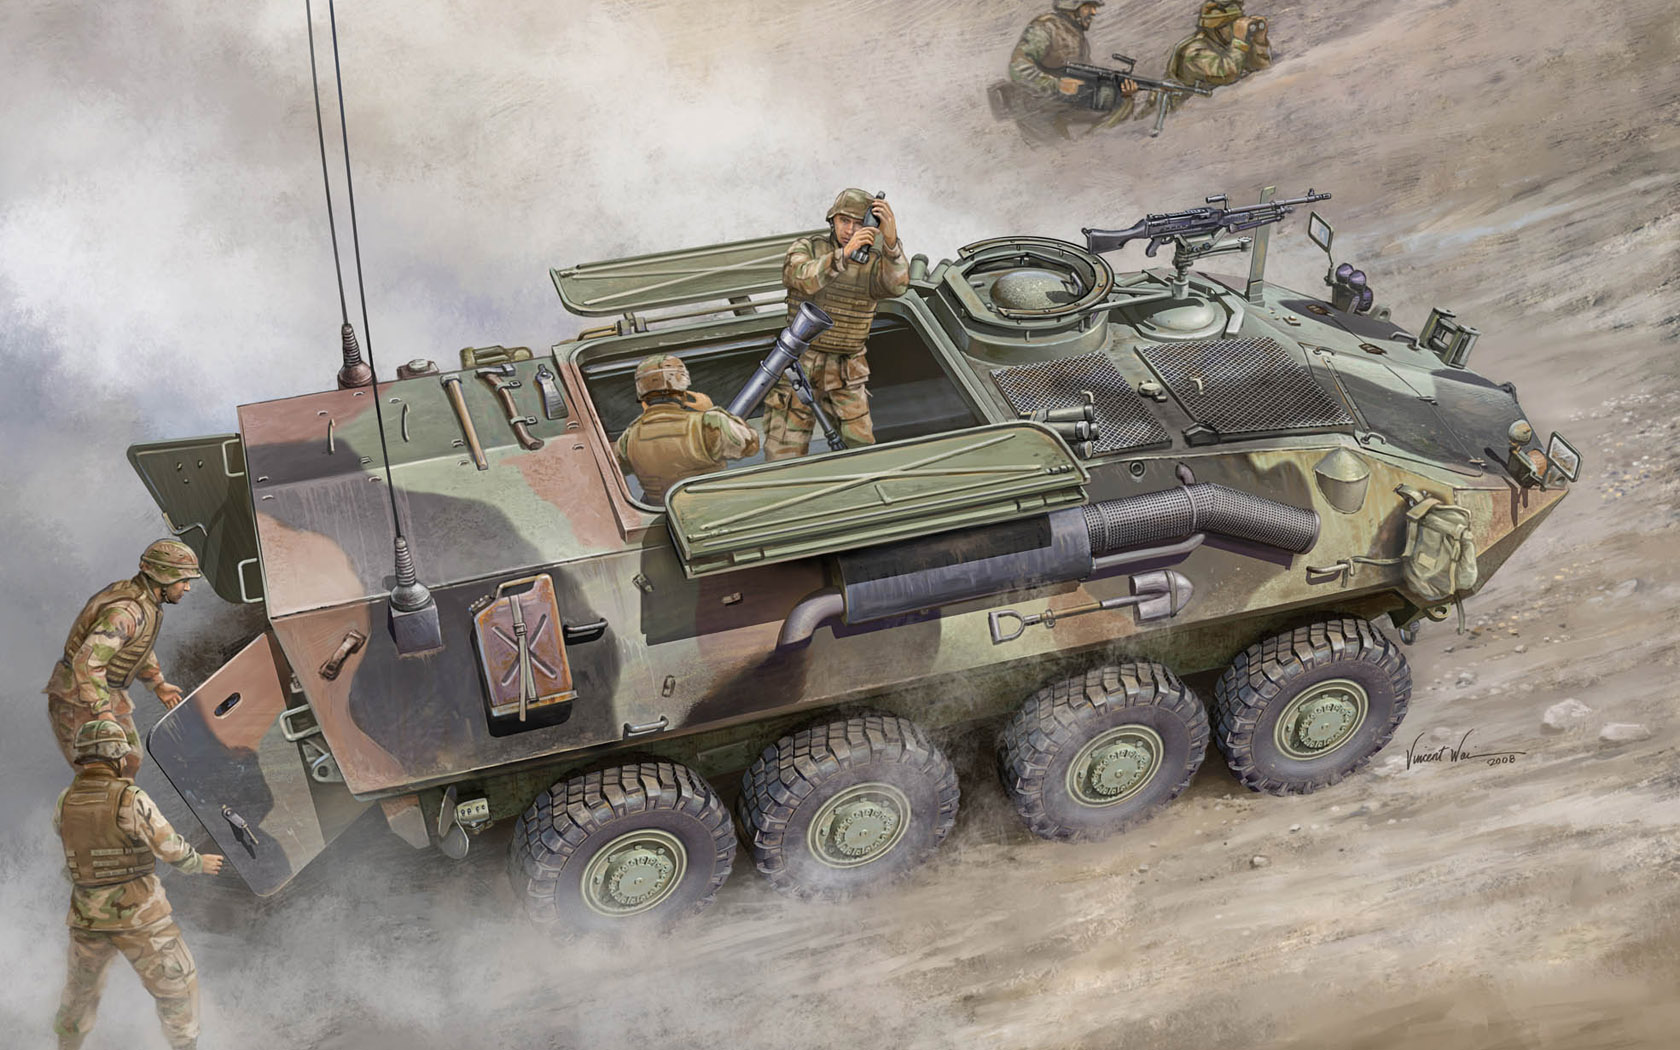 General 1680x1050 car army military military vehicle artwork soldier uniform gun smoke